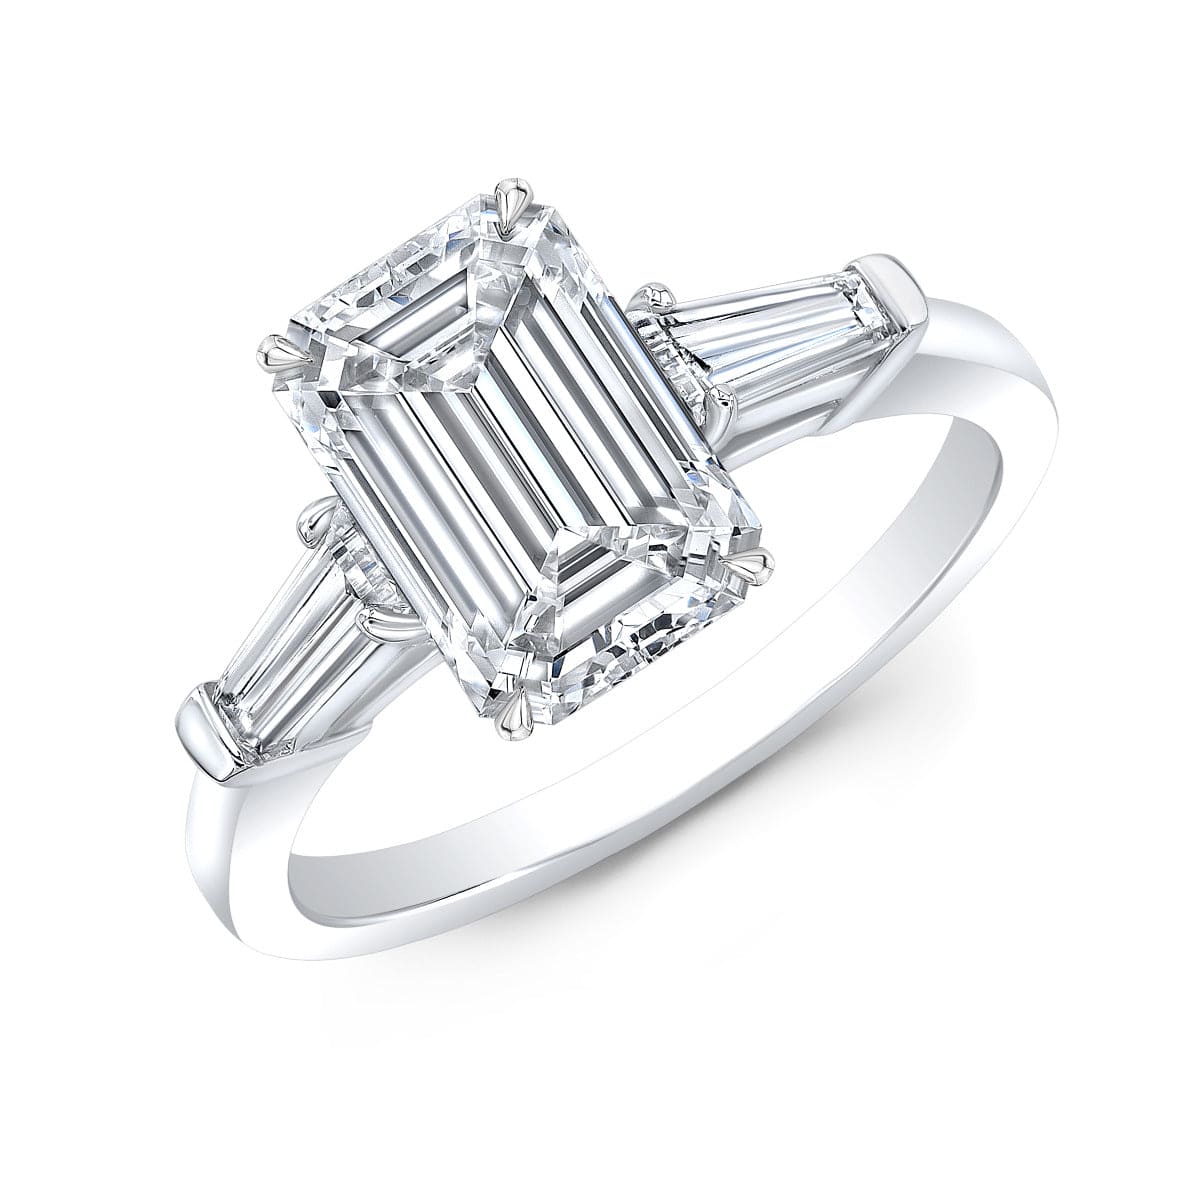 Petite 0.70 carat emerald cut diamond ring